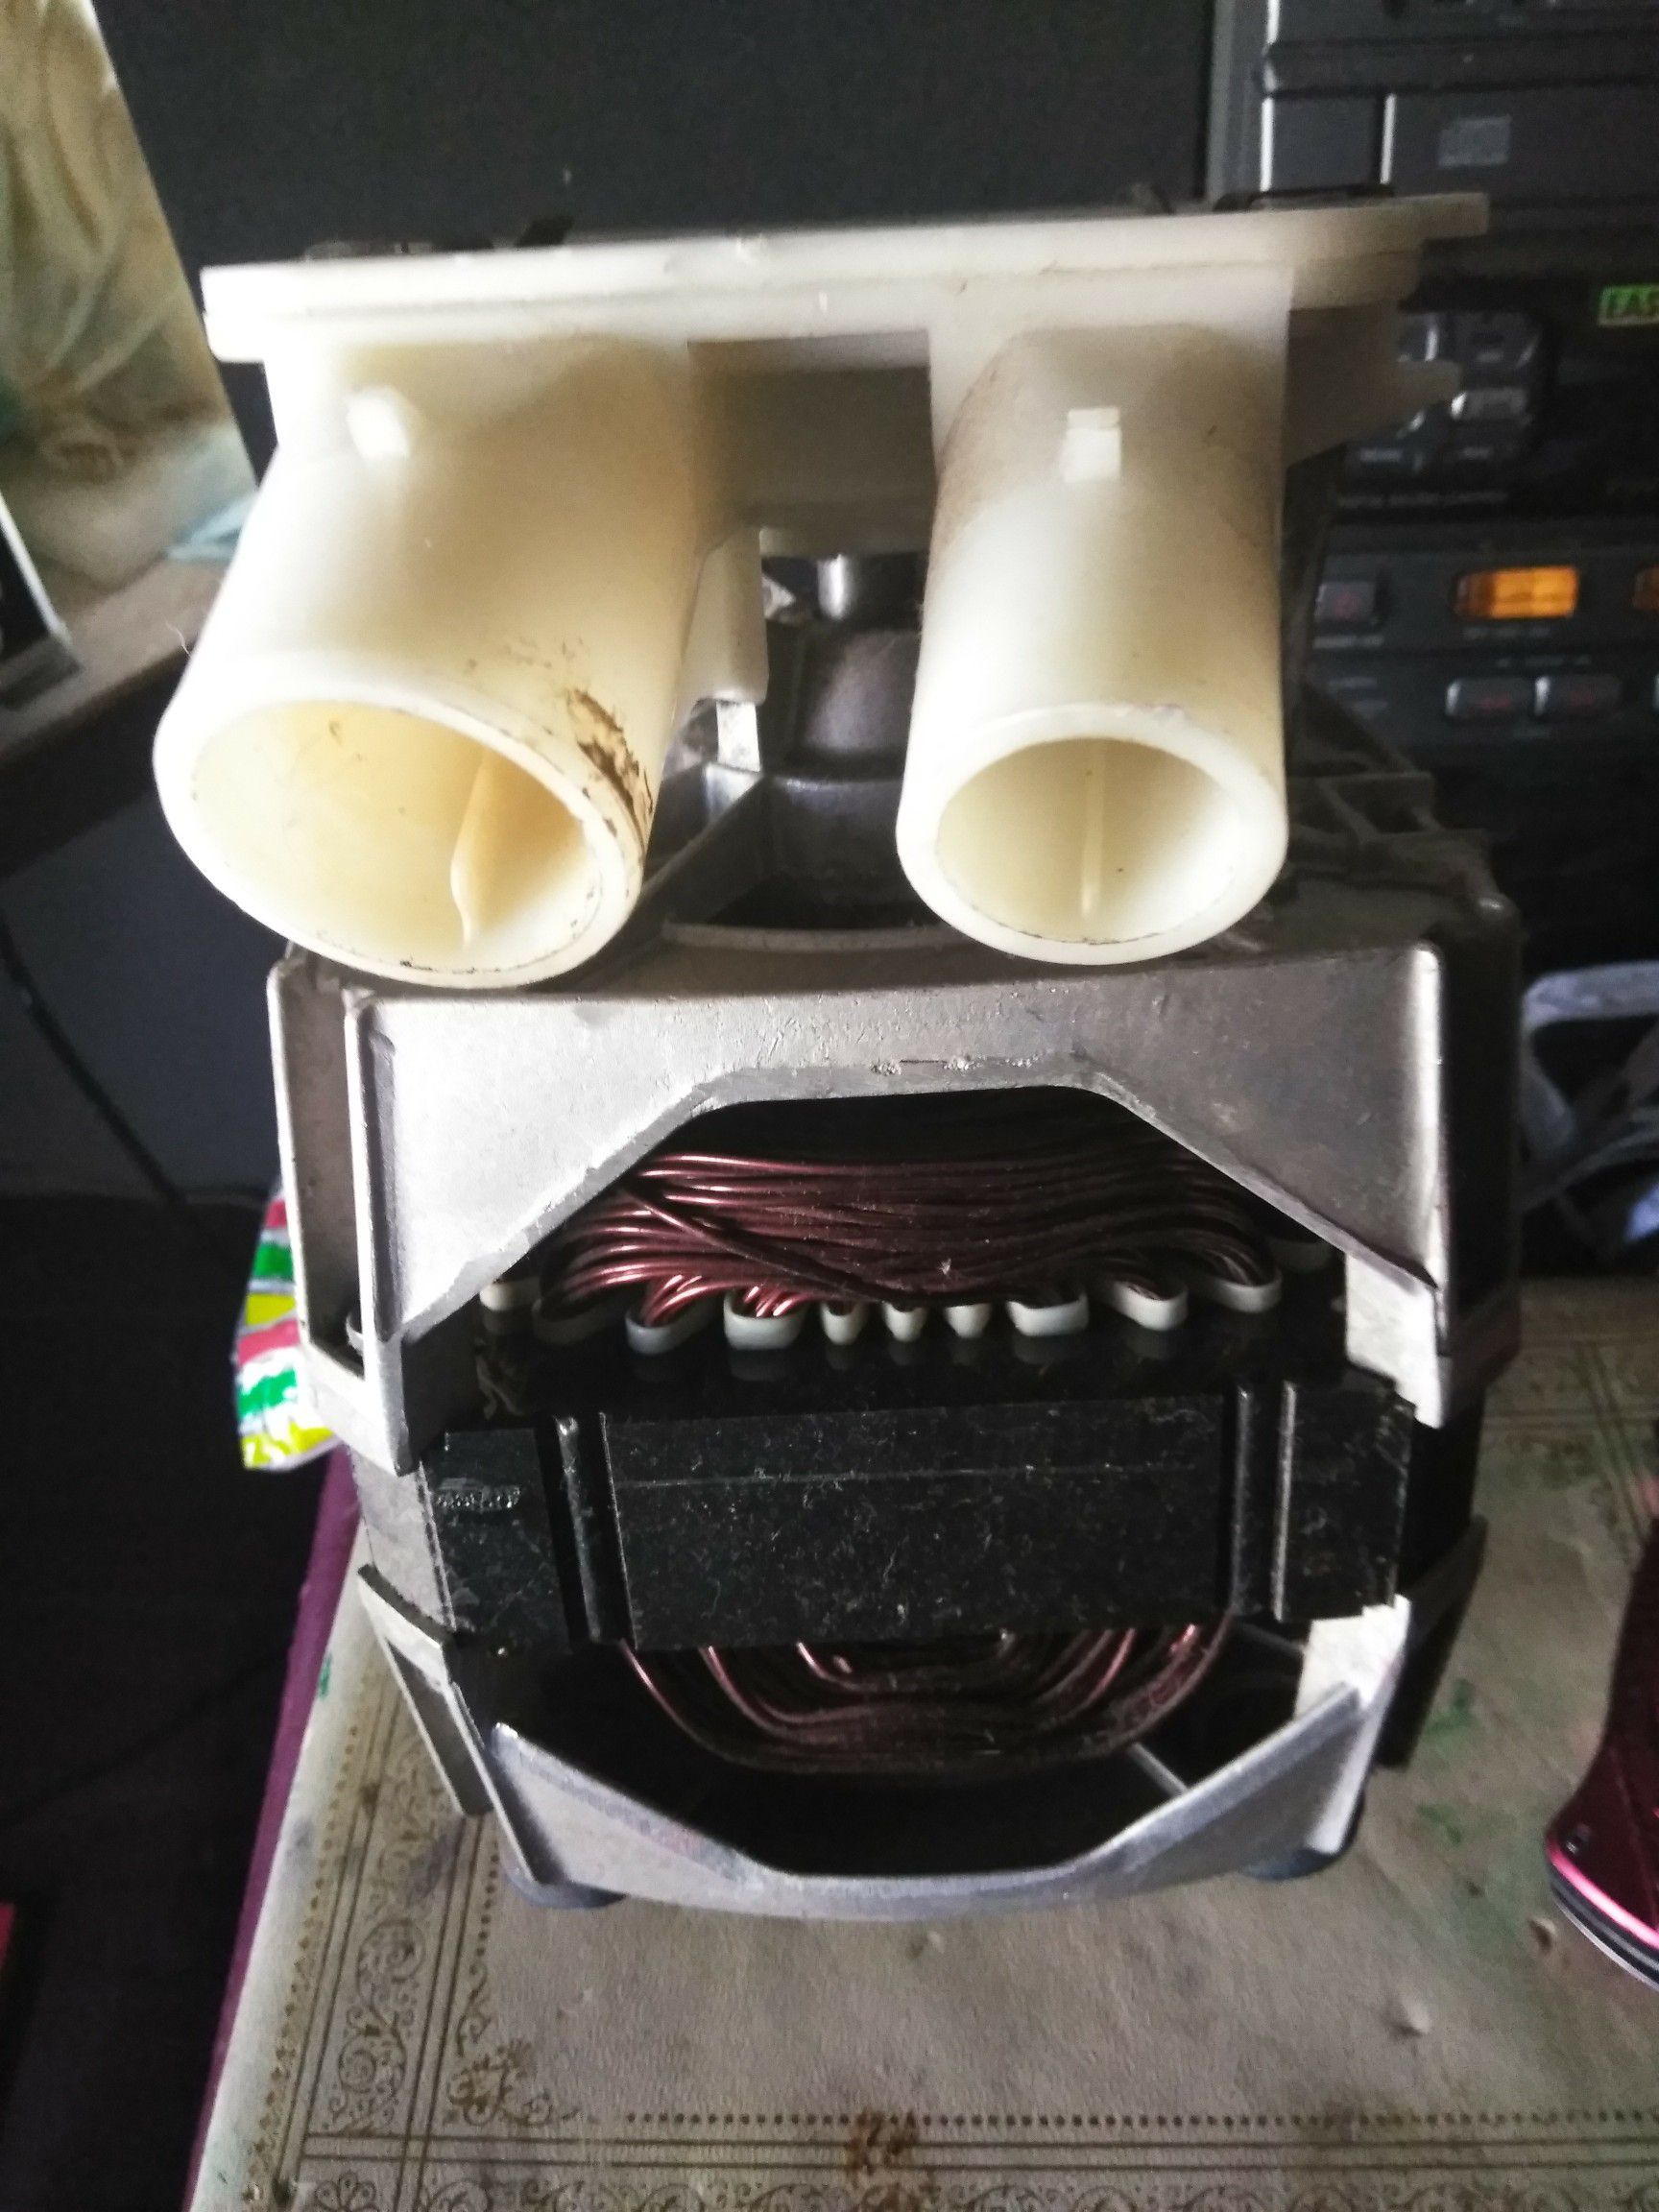 Admiral atw4475vq1 washing machine direct drive washer motor with water drain pump